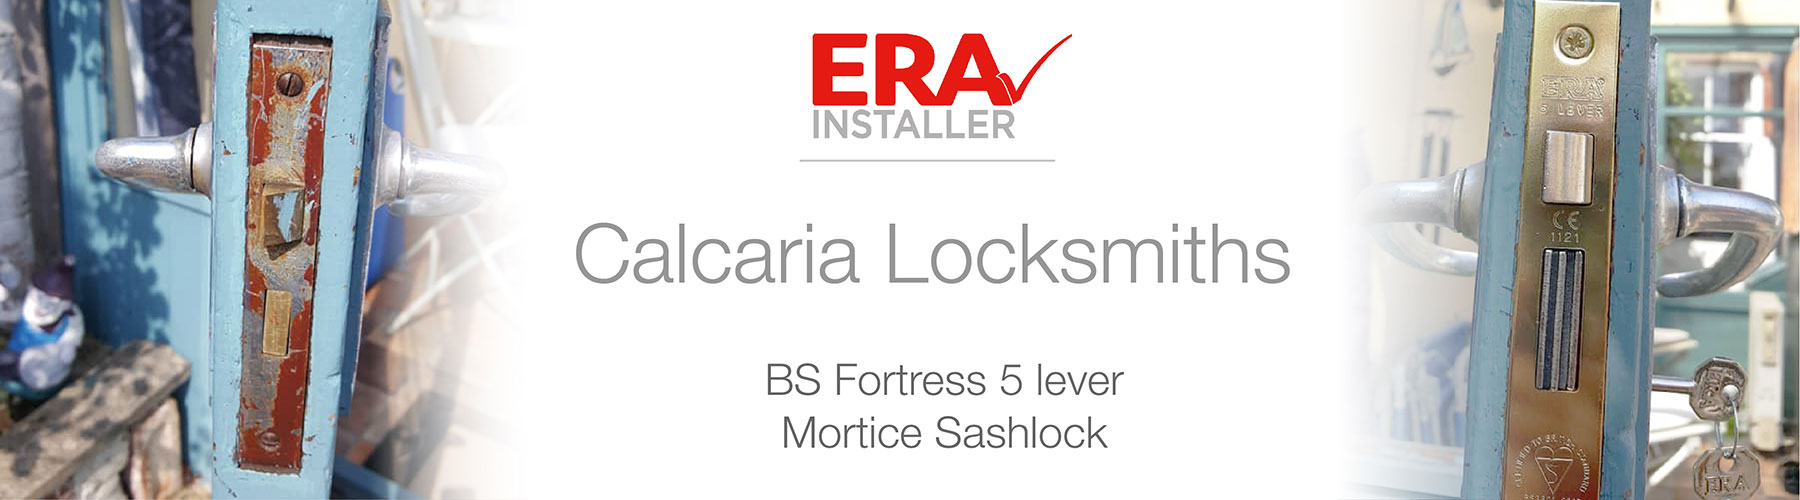 ERA Installer Testimonial Calcaria Locks